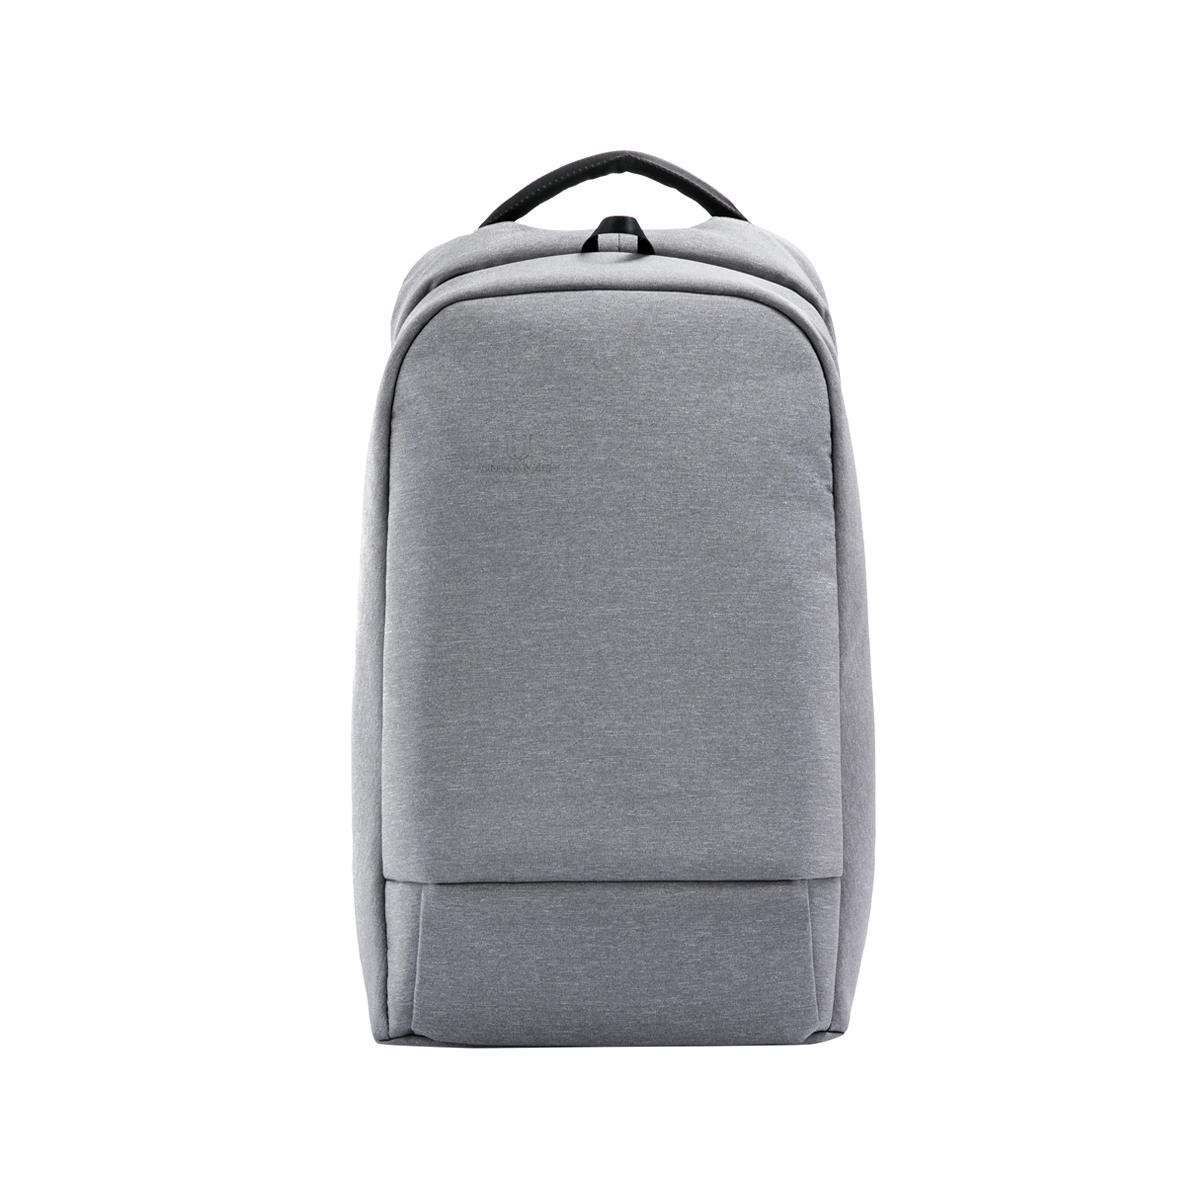 Jordan & judy 18L mochila de hombro antirrobo mochila Impermeable 15.6 pulgadas portátil Bolsa al aire libre de viaje